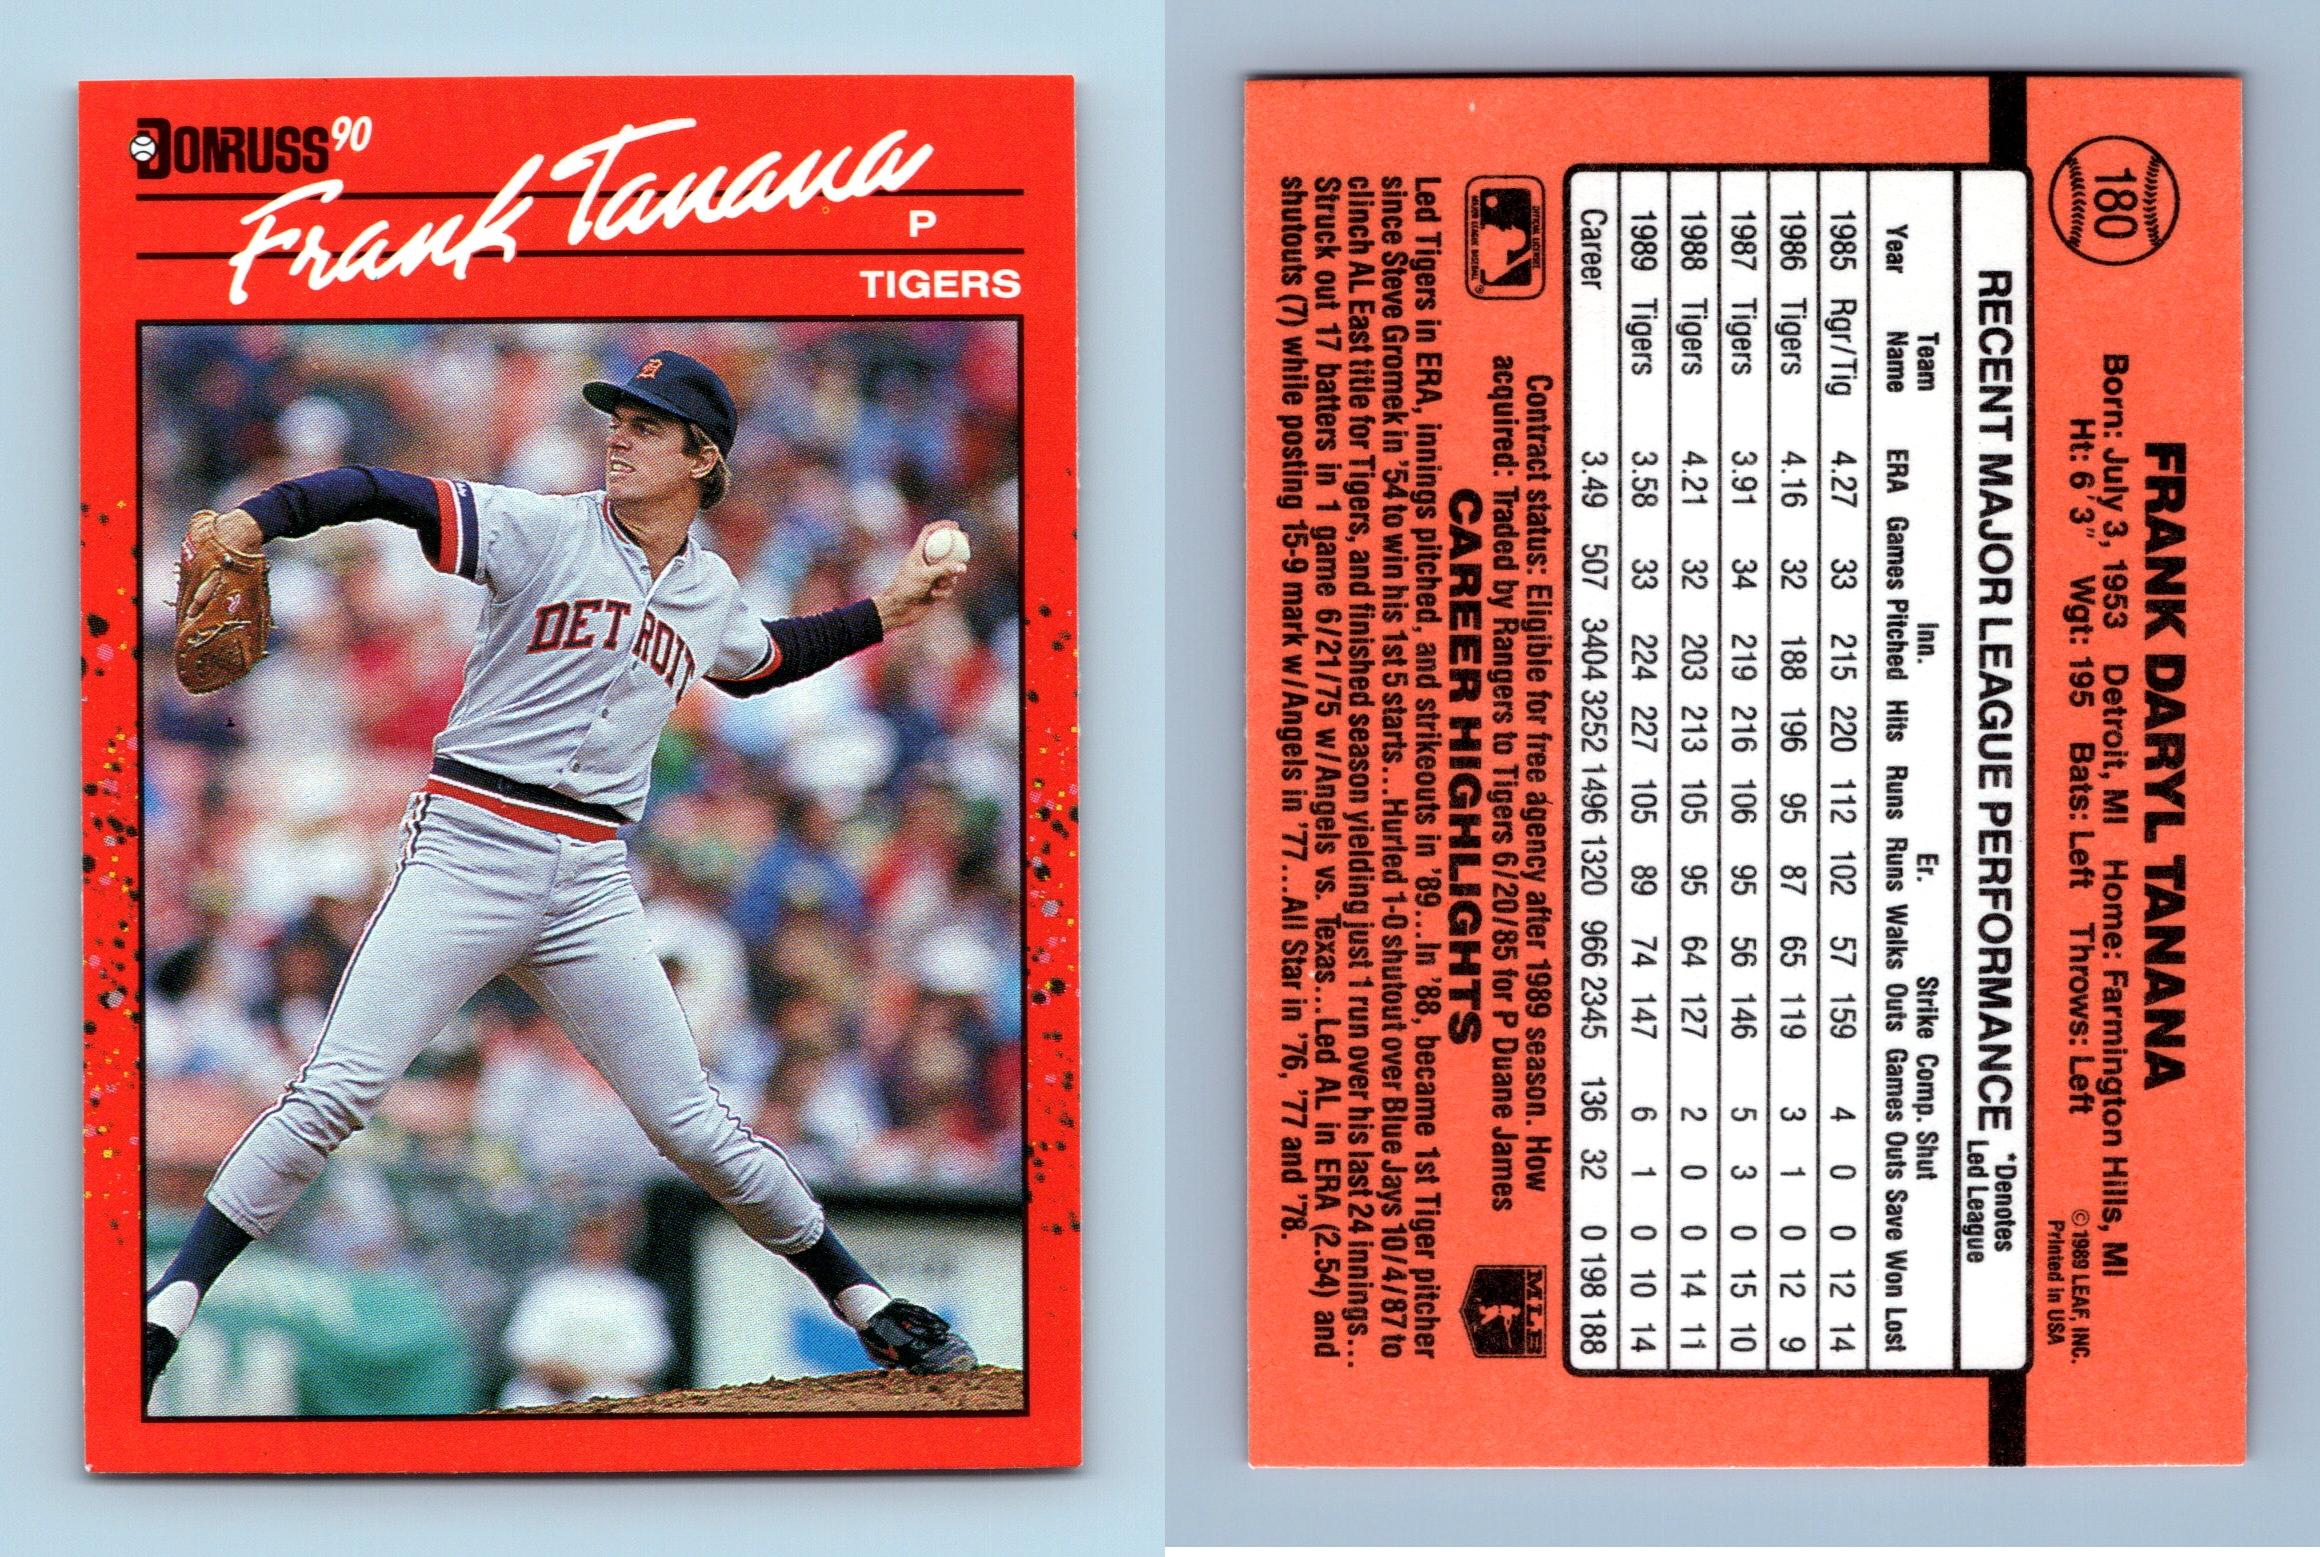 Frank Tanana - Tigers #180 Donruss 1990 Baseball Trading Card